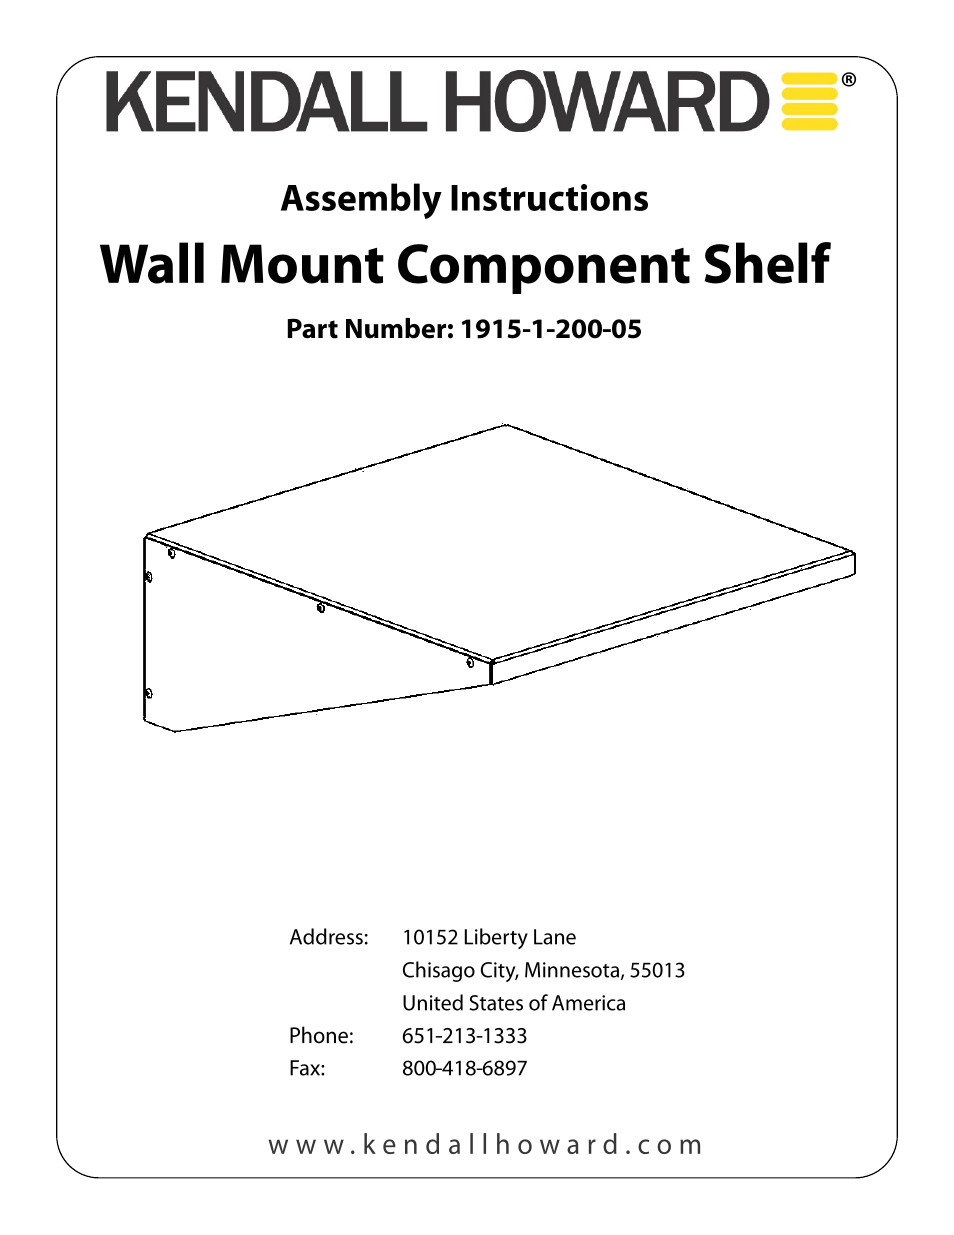 1915-1-200-05 Wall Mount Component Shelf